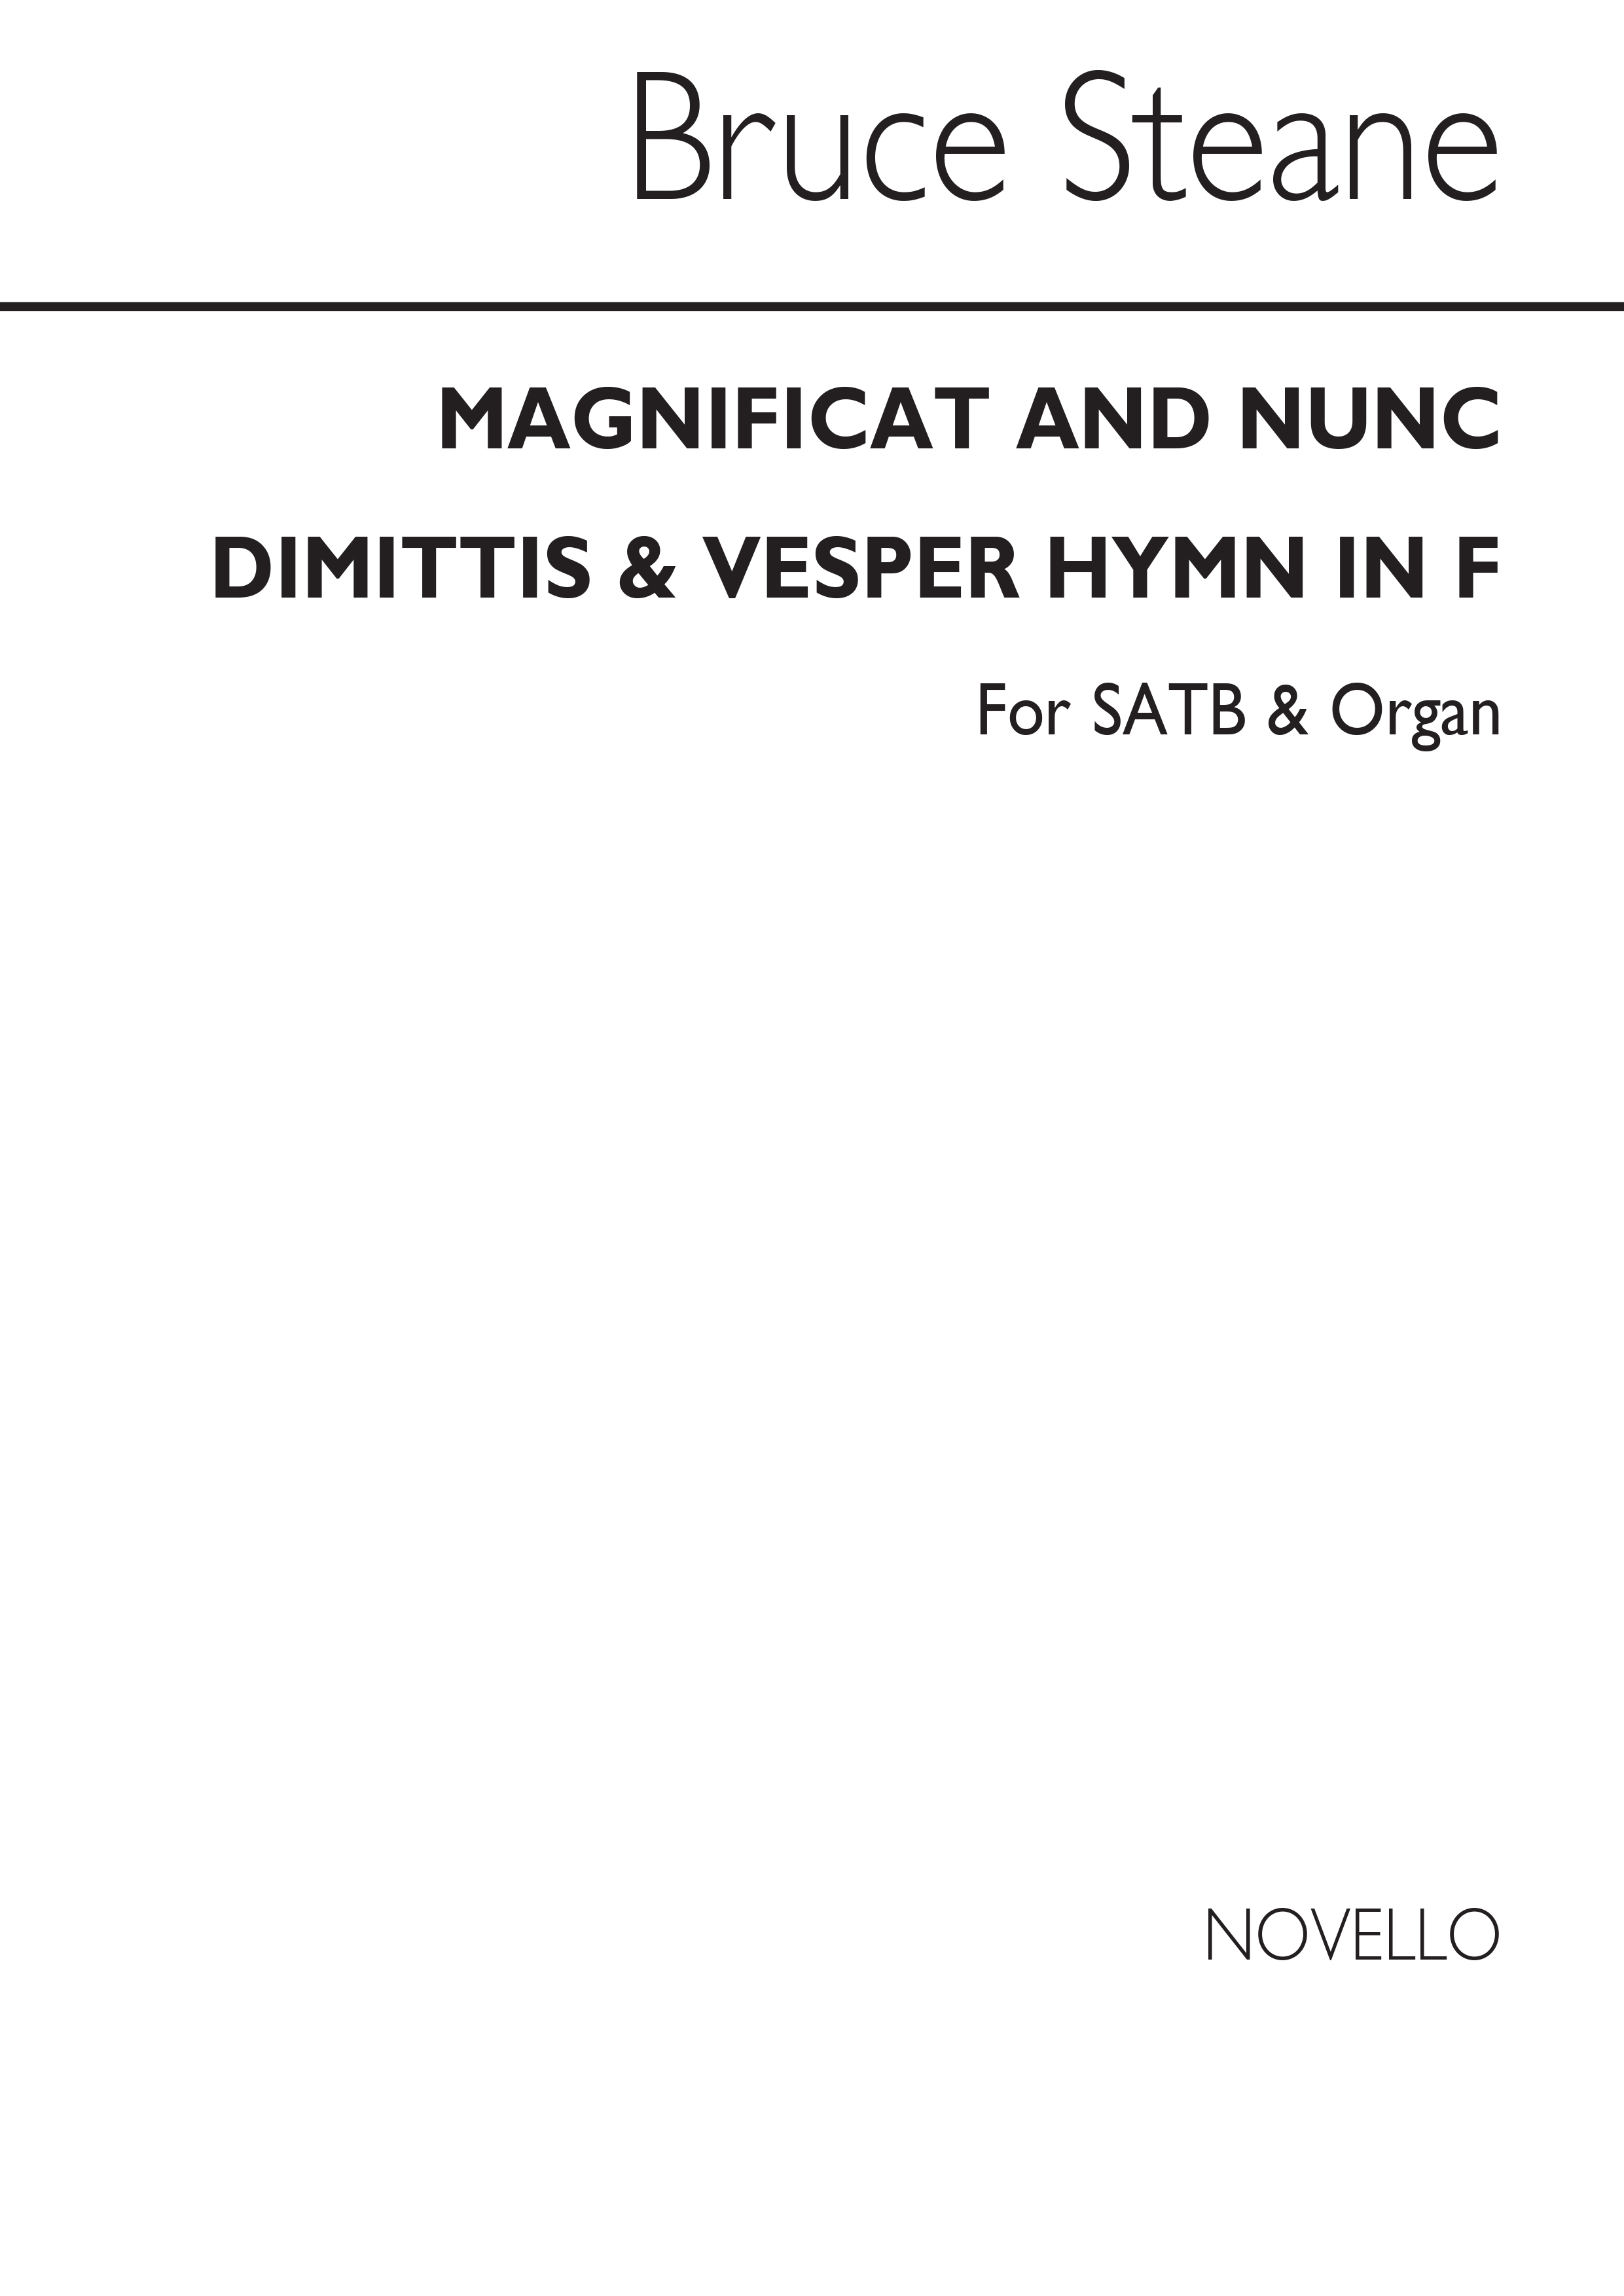 Bruce Steane: Magnificat And Nunc Dimittis And Vesper Hymn In F Satb/Organ